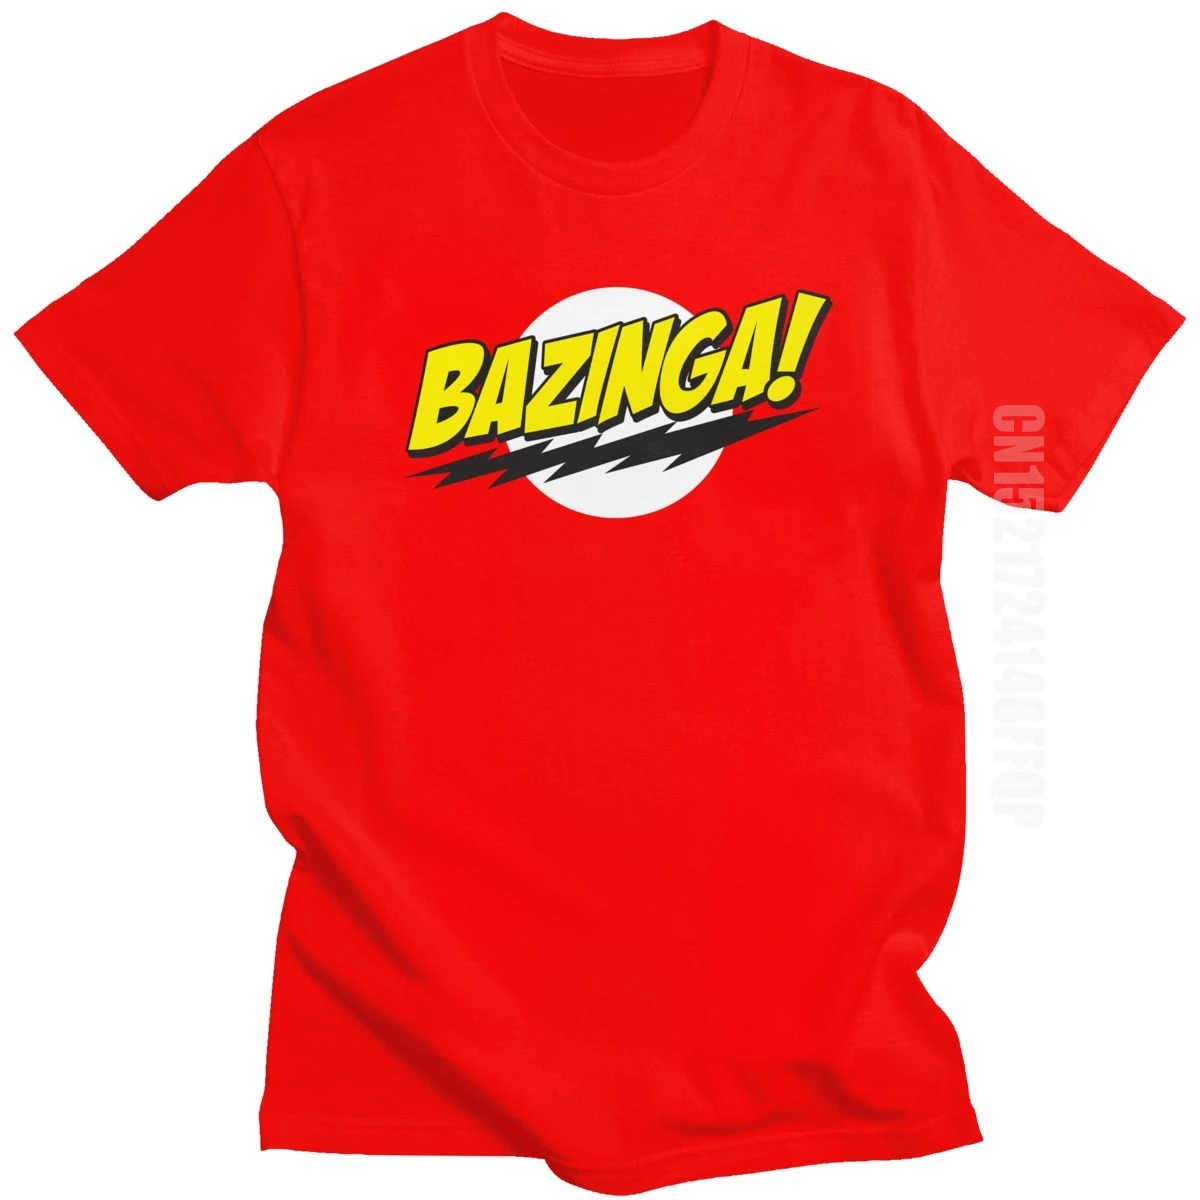 Camiseta de The Big Bang Theory Bazinga para hombre, camisa 100% de algodón, playera de Sheldon Cooper, camiseta Geek TBBT, regalo de cumpleaños